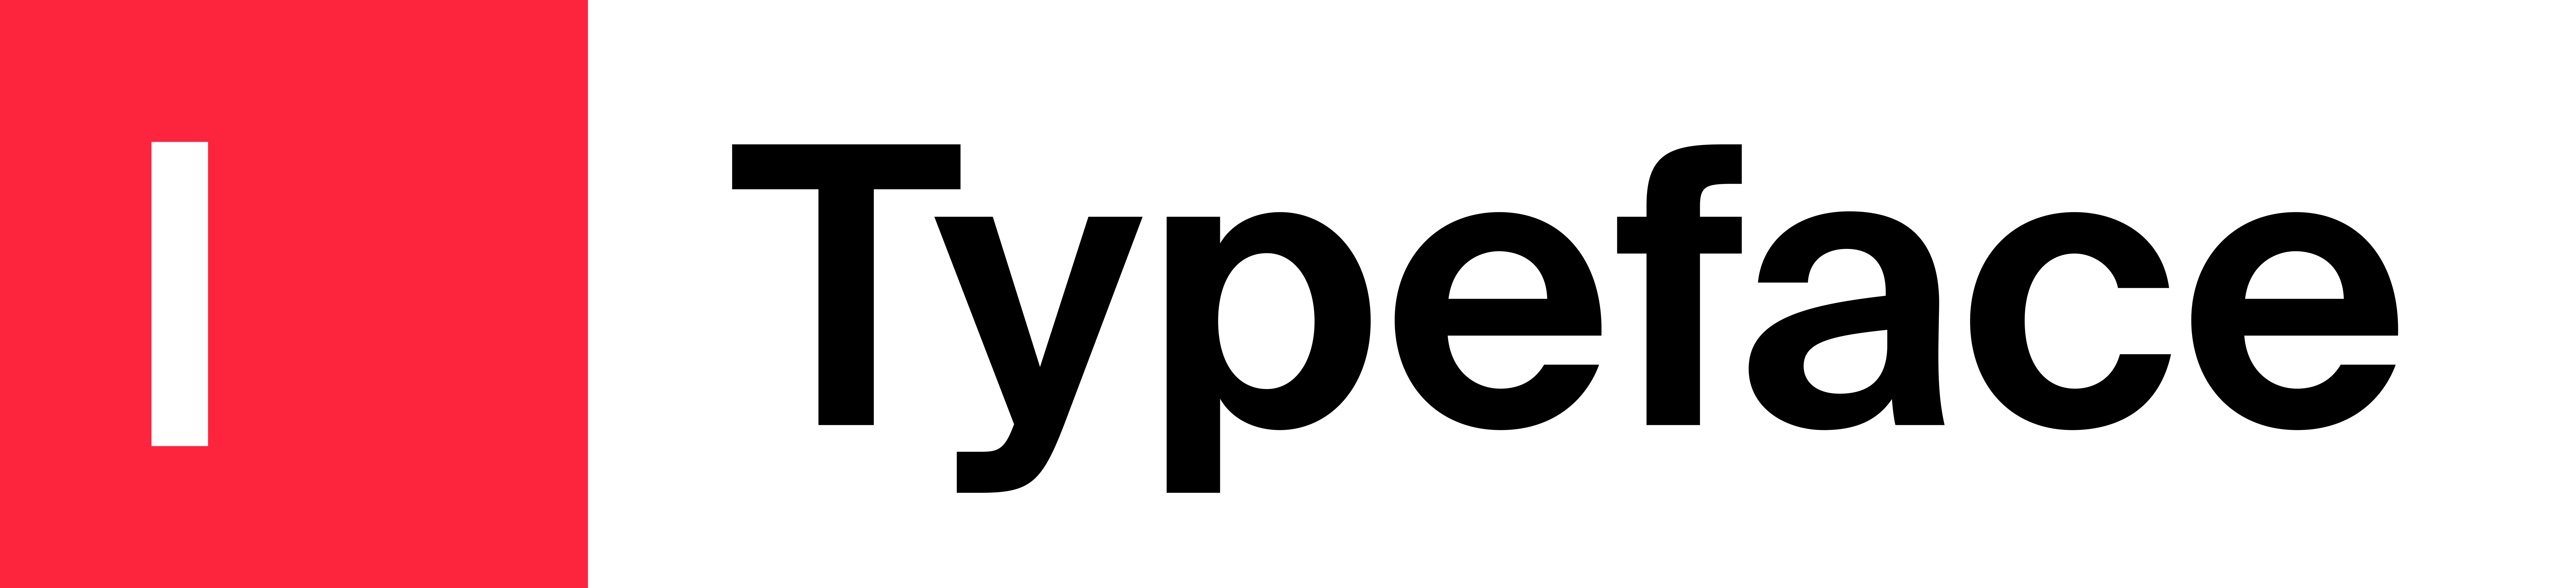 Typeface logo for white background